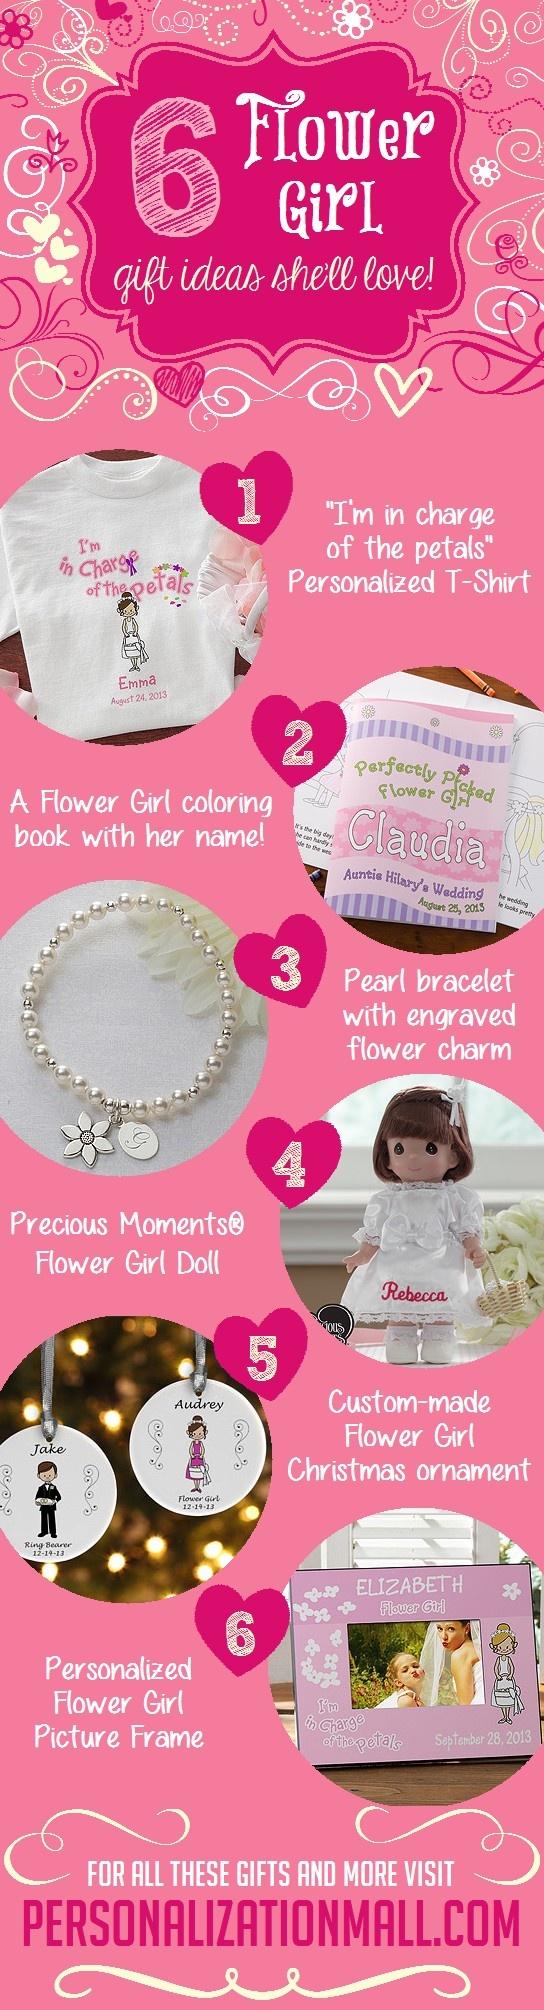 Wedding - Flower Girl Gifts 